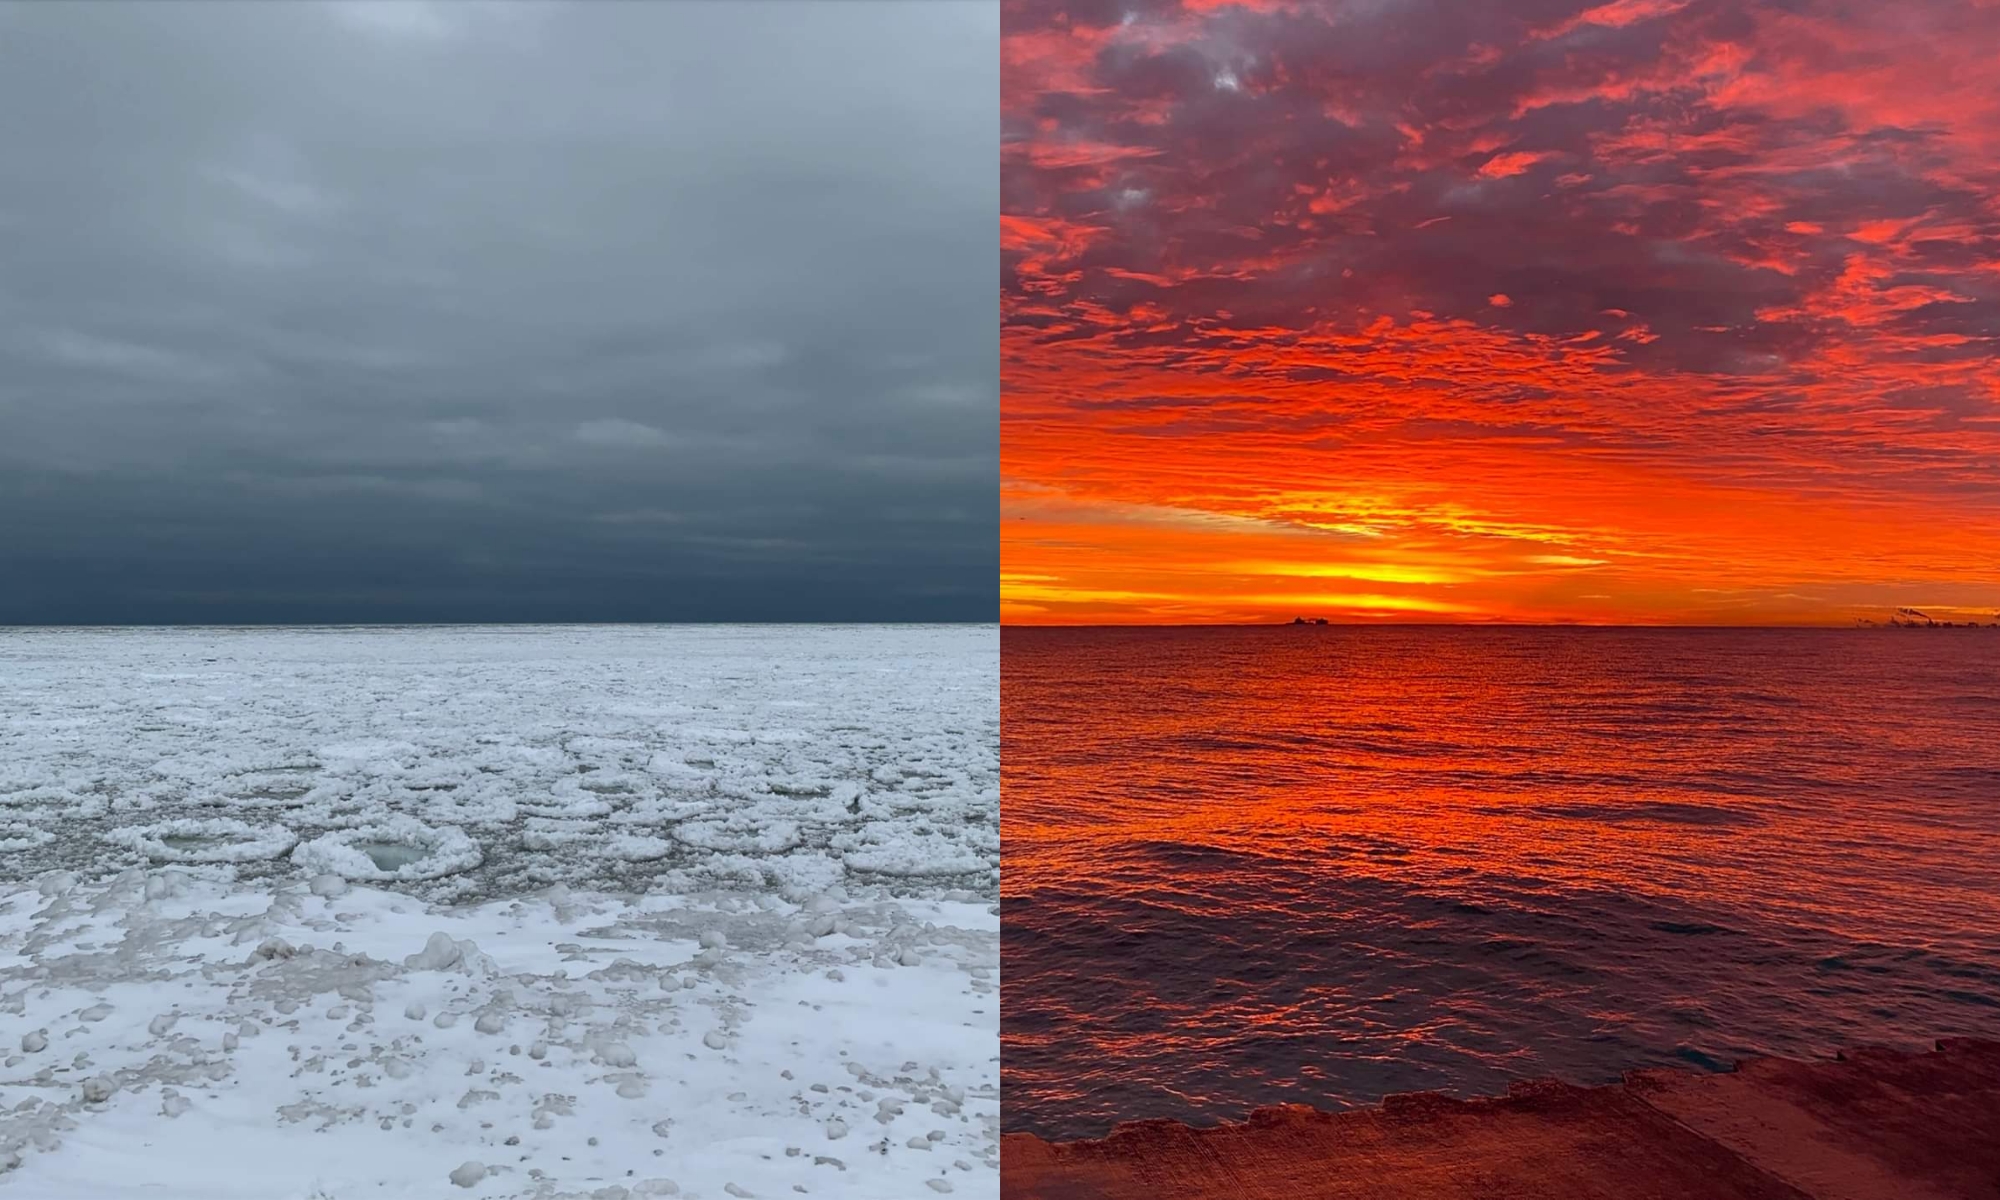 Two views of Lake Michigan